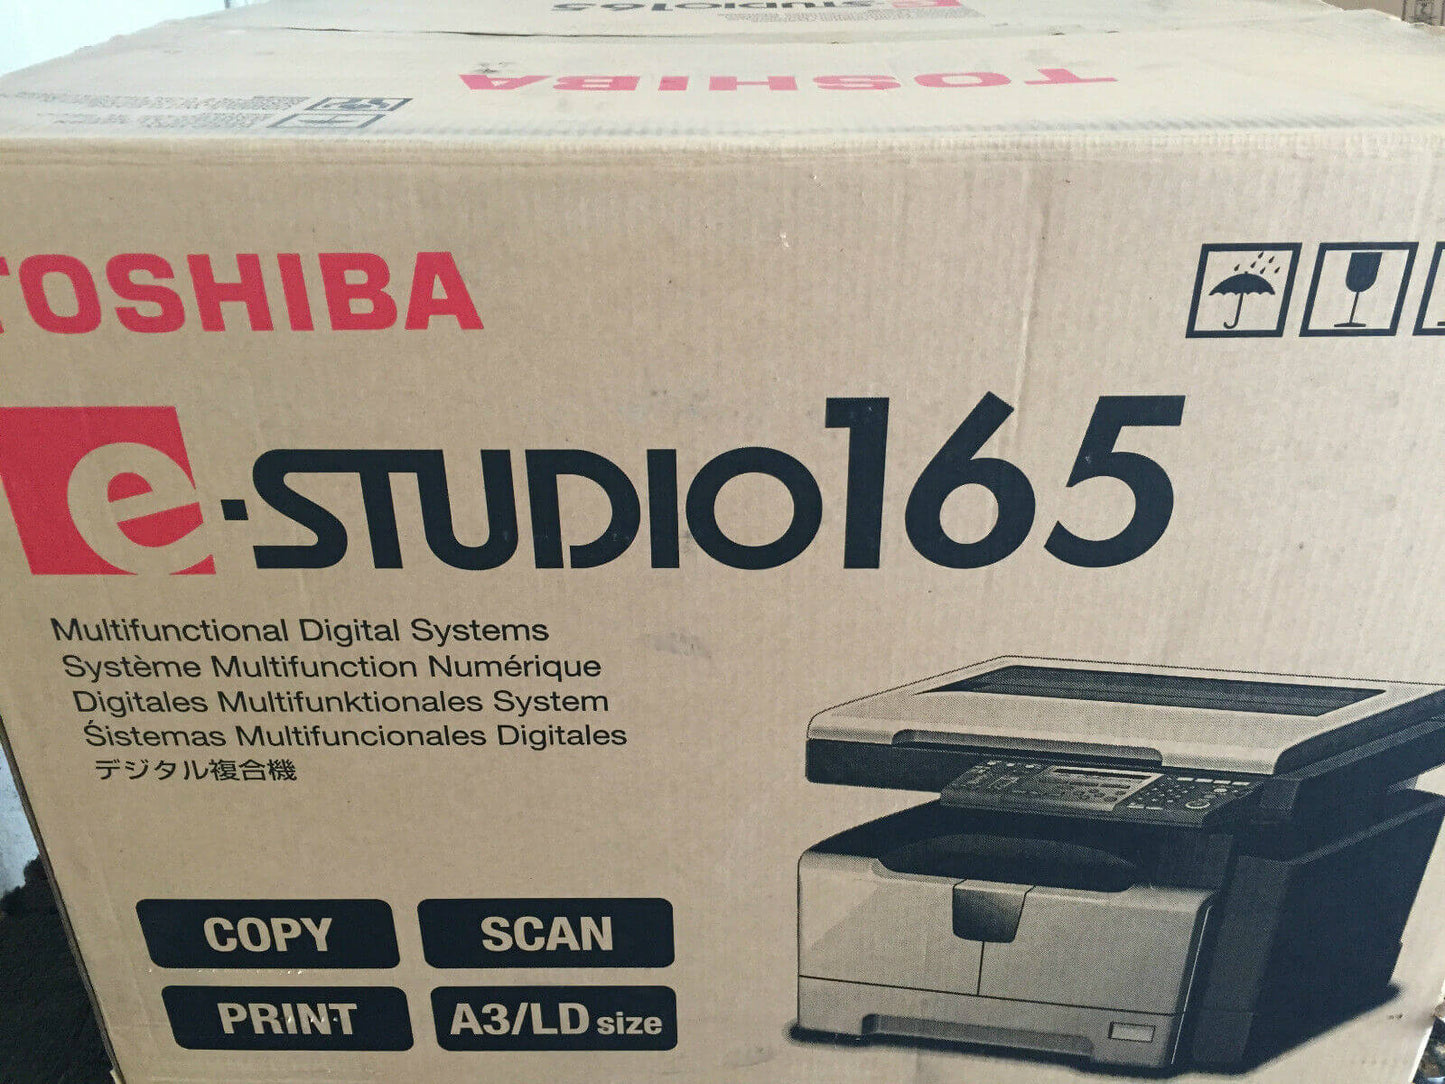 New Factory Sealed Toshiba E-studio 165 Copy Print Scan New in box NIB - copier-clearance-center